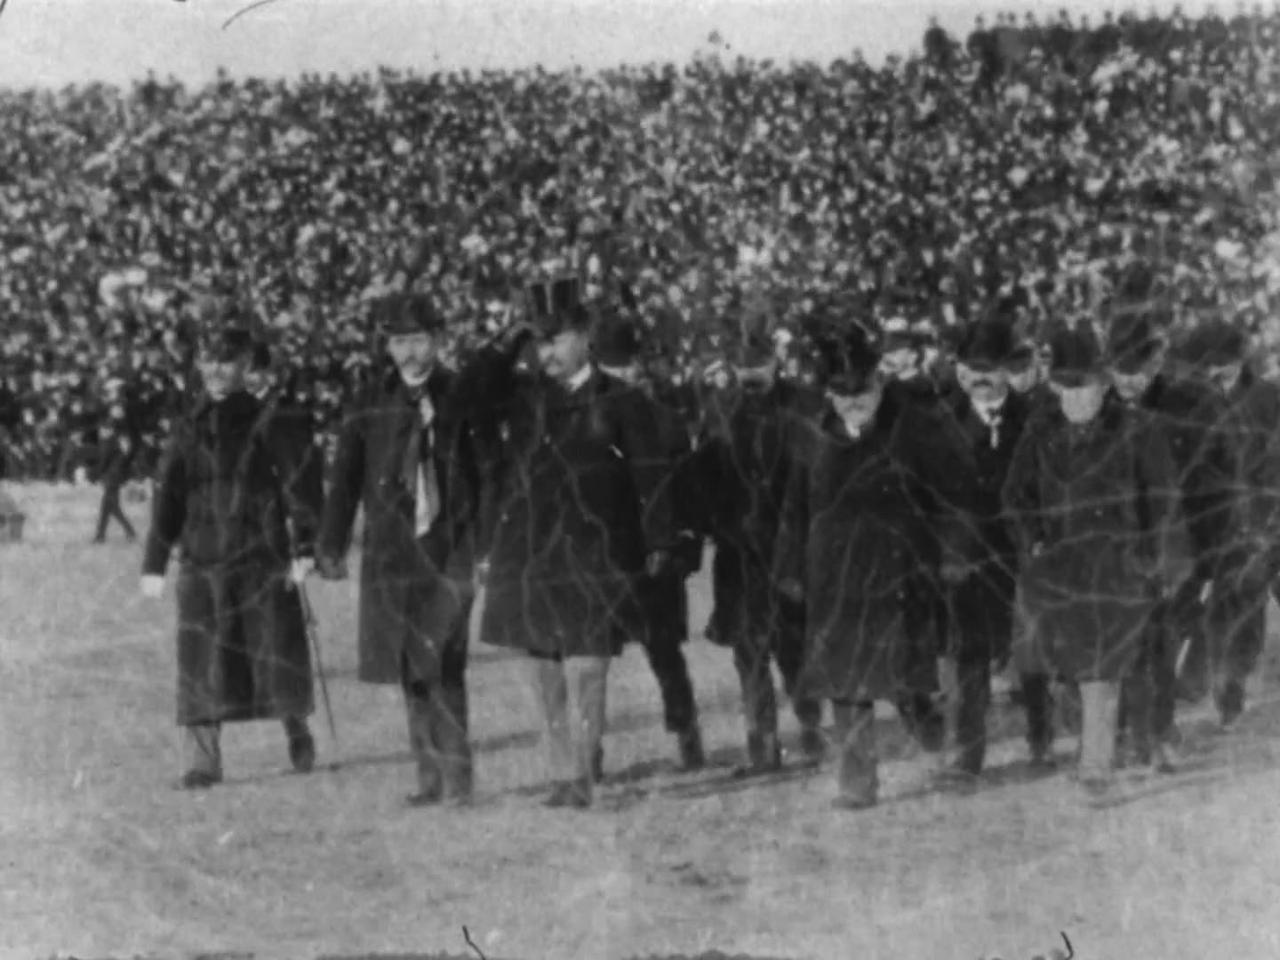 President Roosevelt At Army-Navy Football Game (1902 Original Black & White Film)